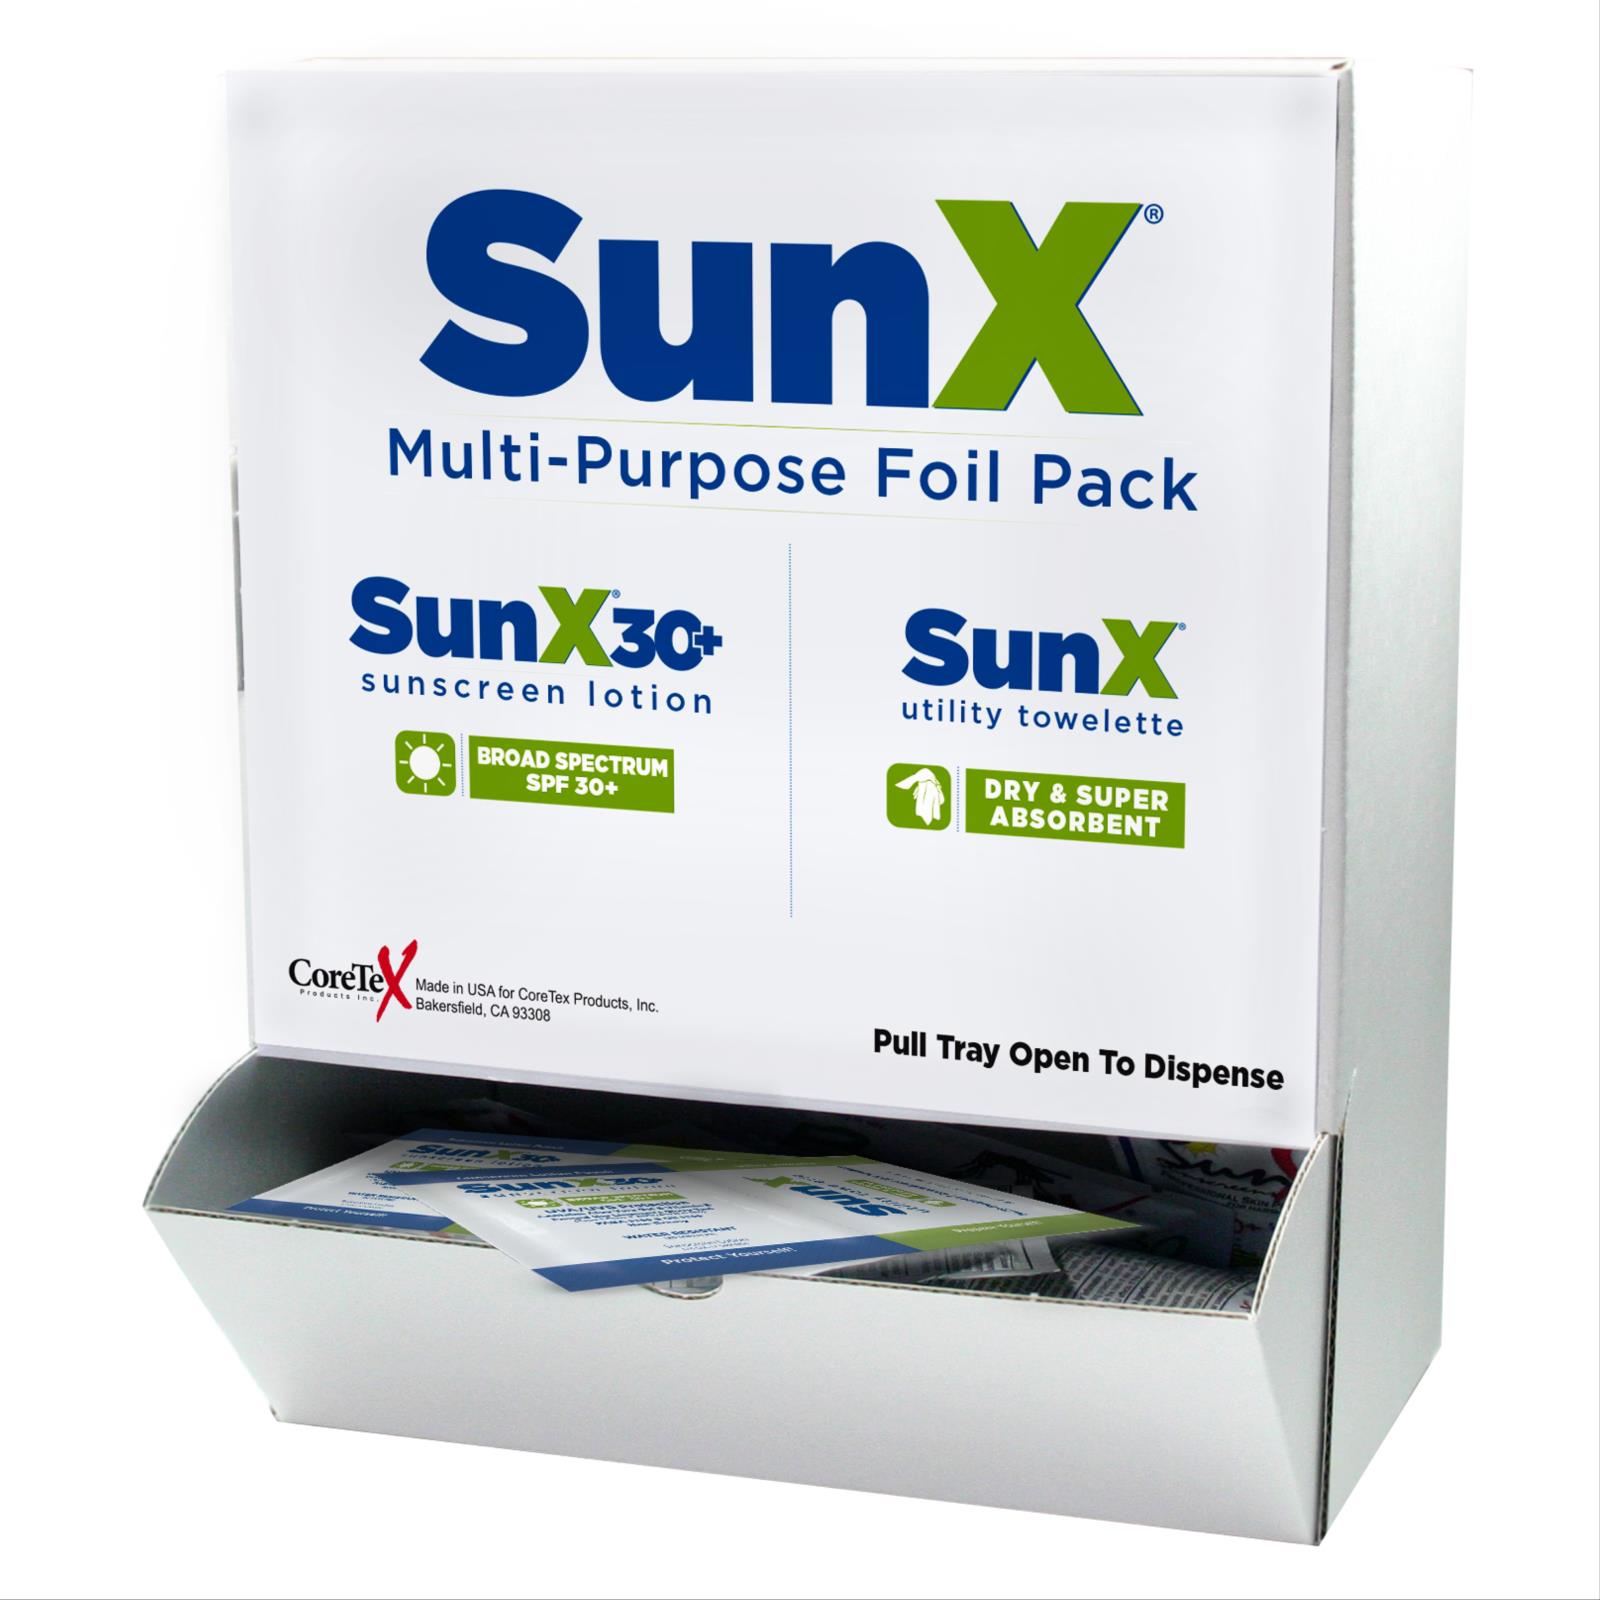 SunX® 30+ Multi-Purpose Foil Pack